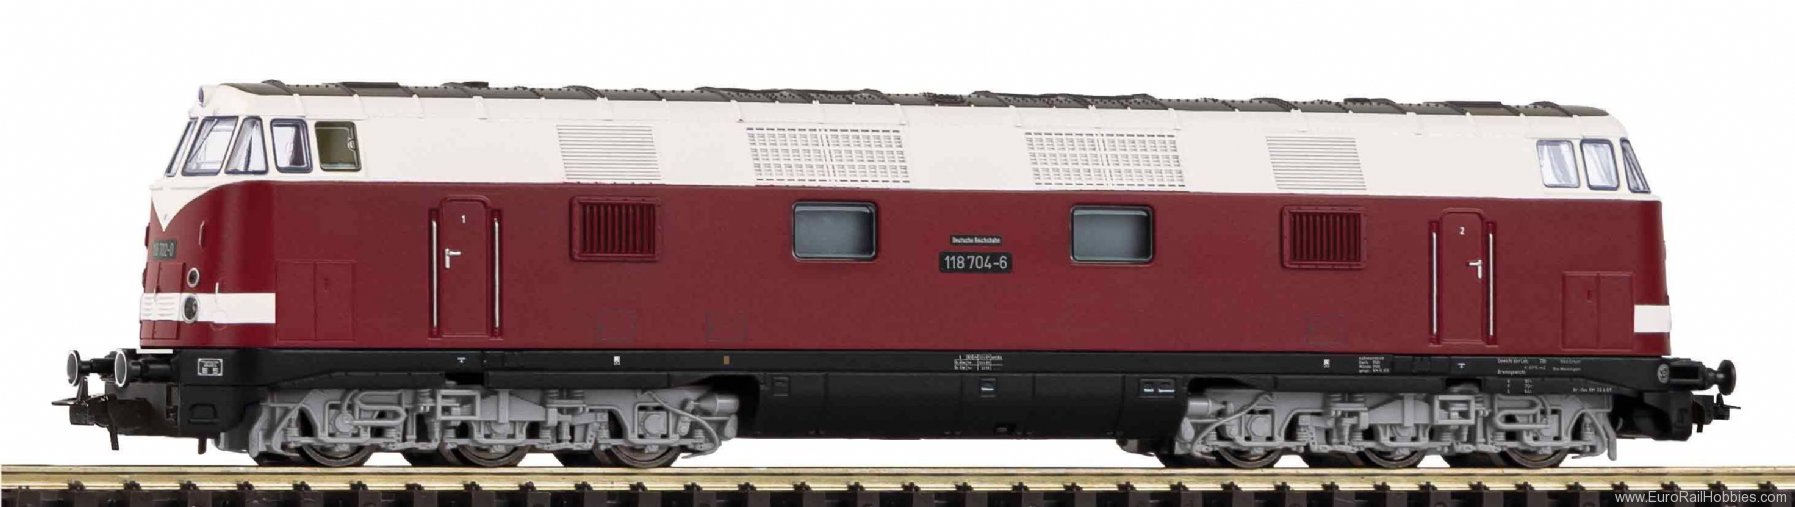 Piko 52950 Diesel locomotive BR 118 5-8 Sparlack DR IV (